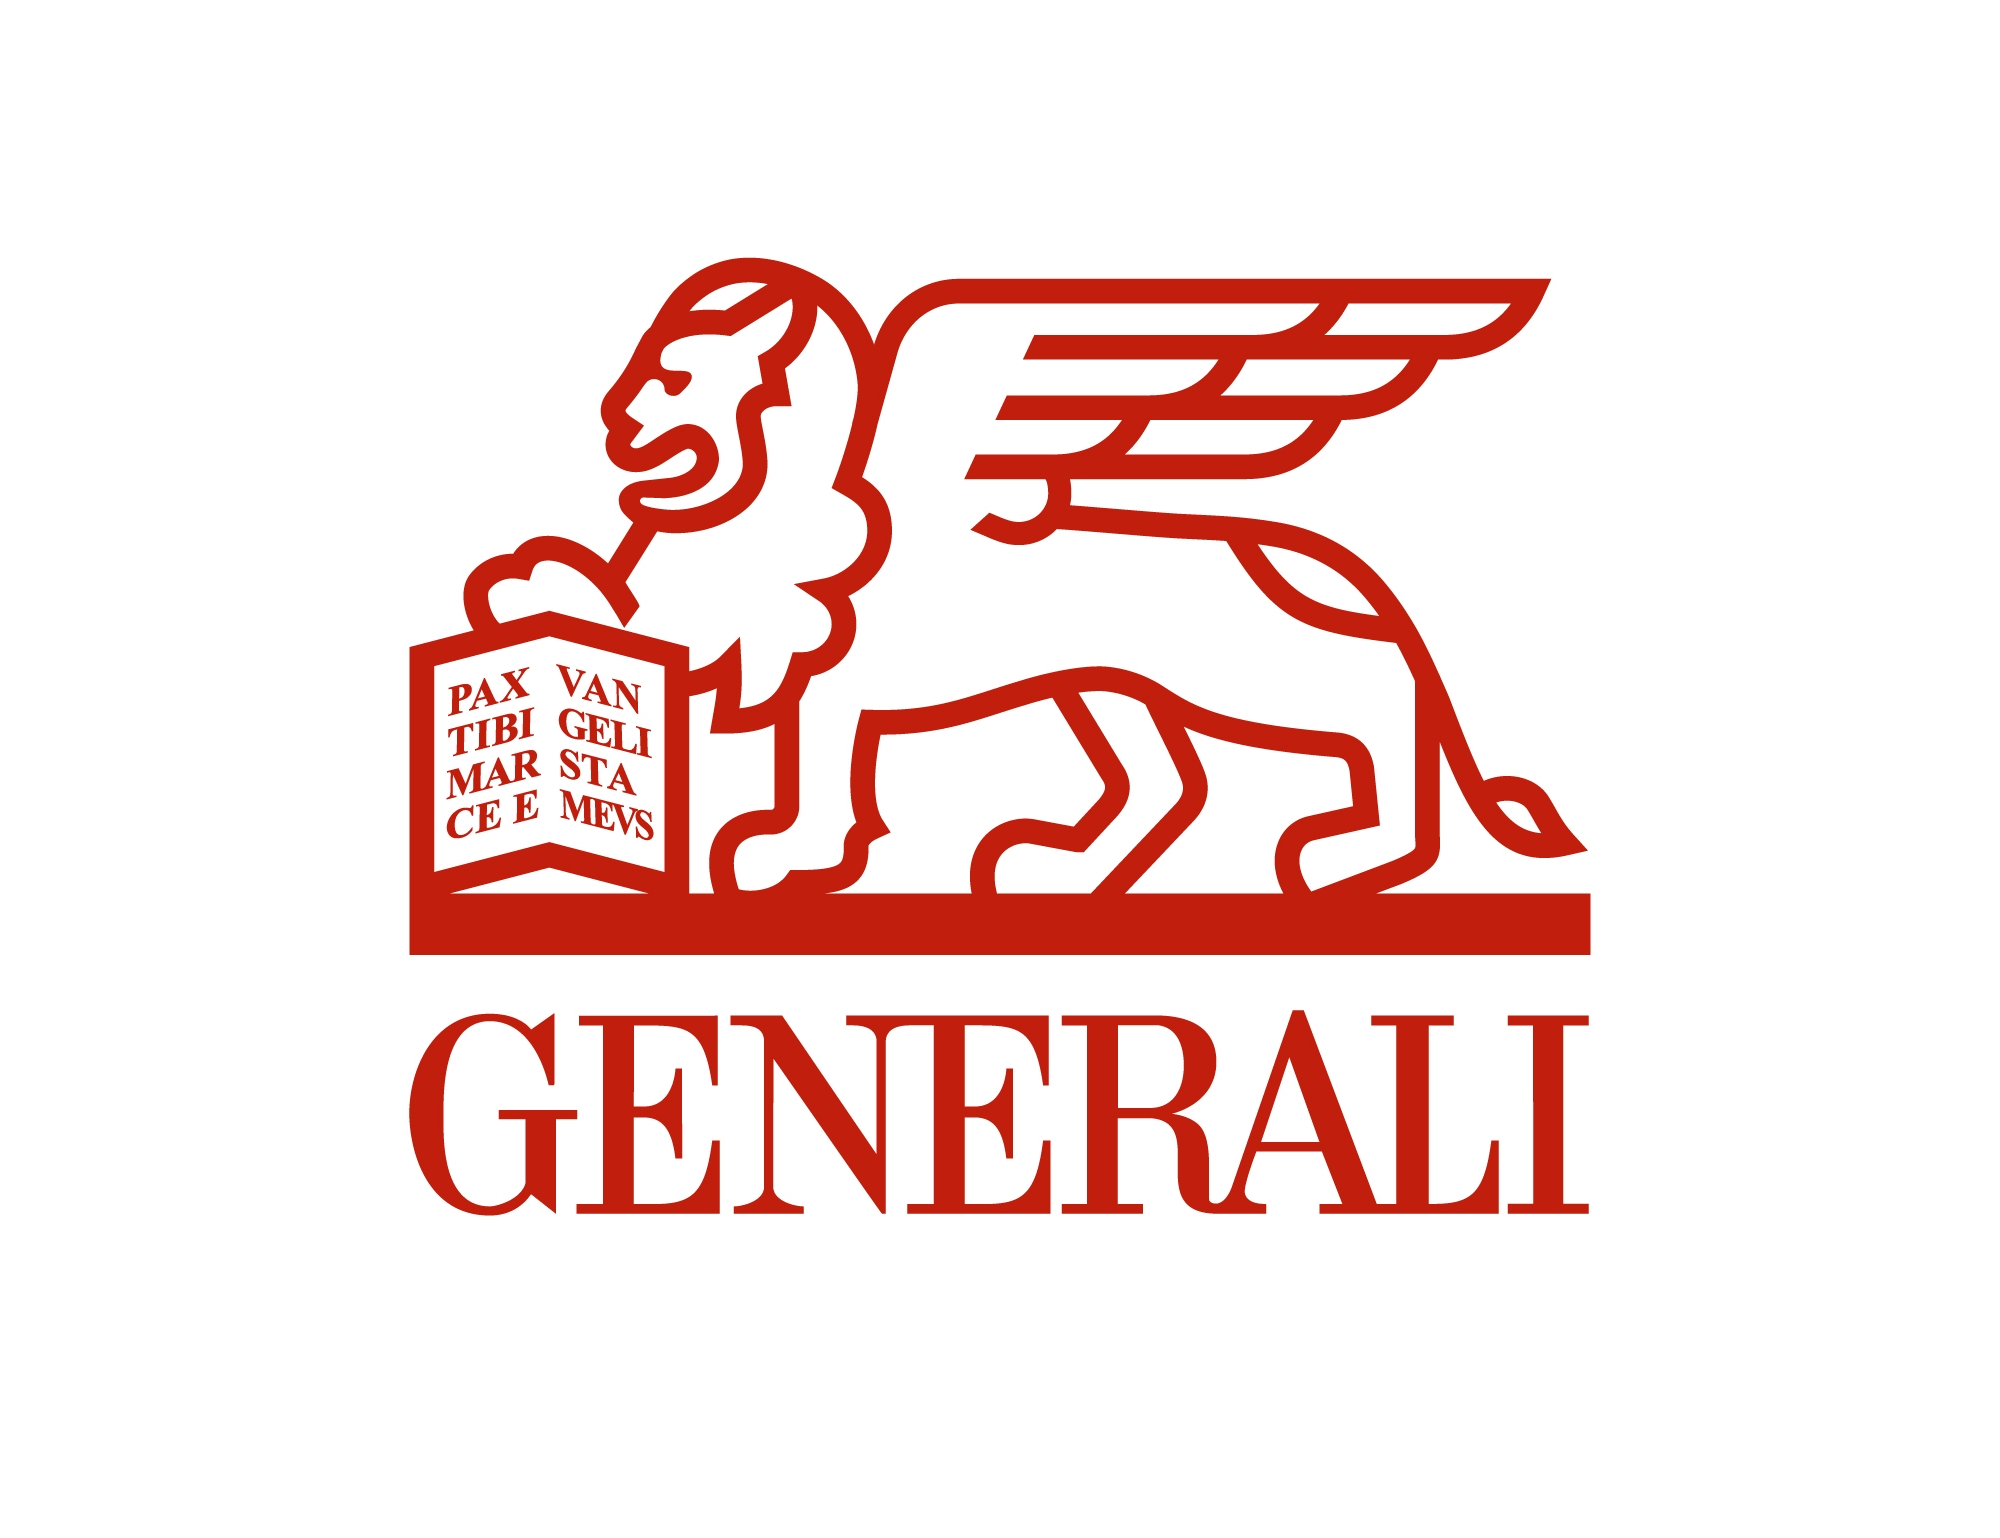 generali-logo